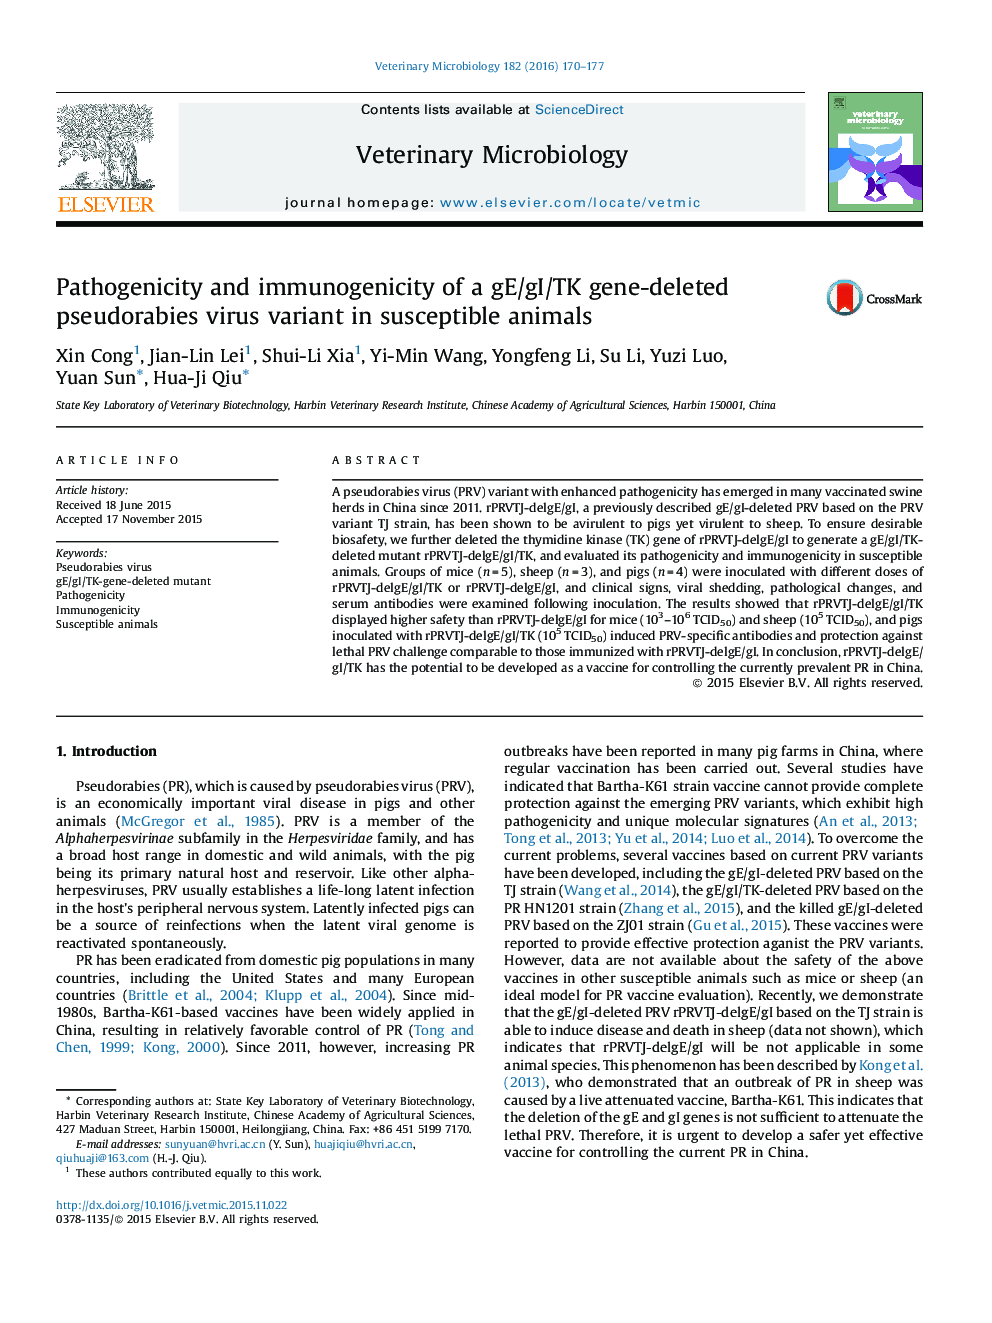 Pathogenicity and immunogenicity of a gE/gI/TK gene-deleted pseudorabies virus variant in susceptible animals